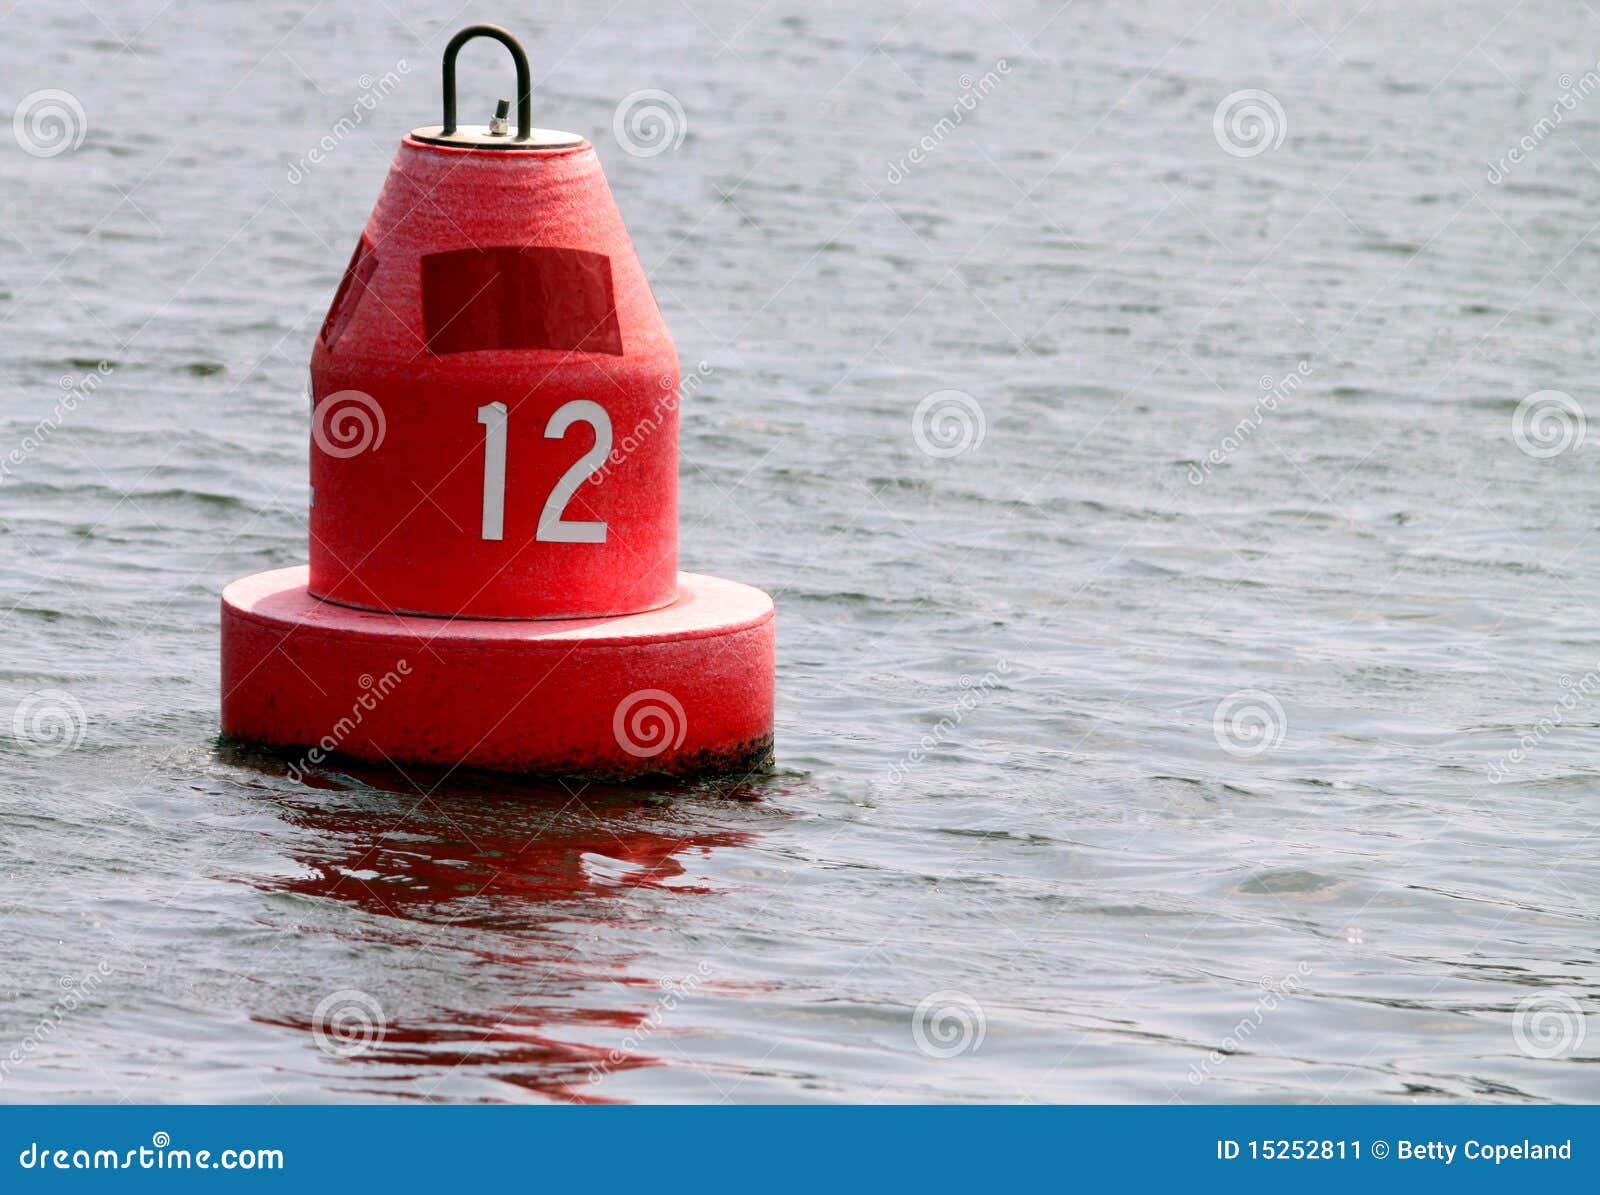 red marker buoy